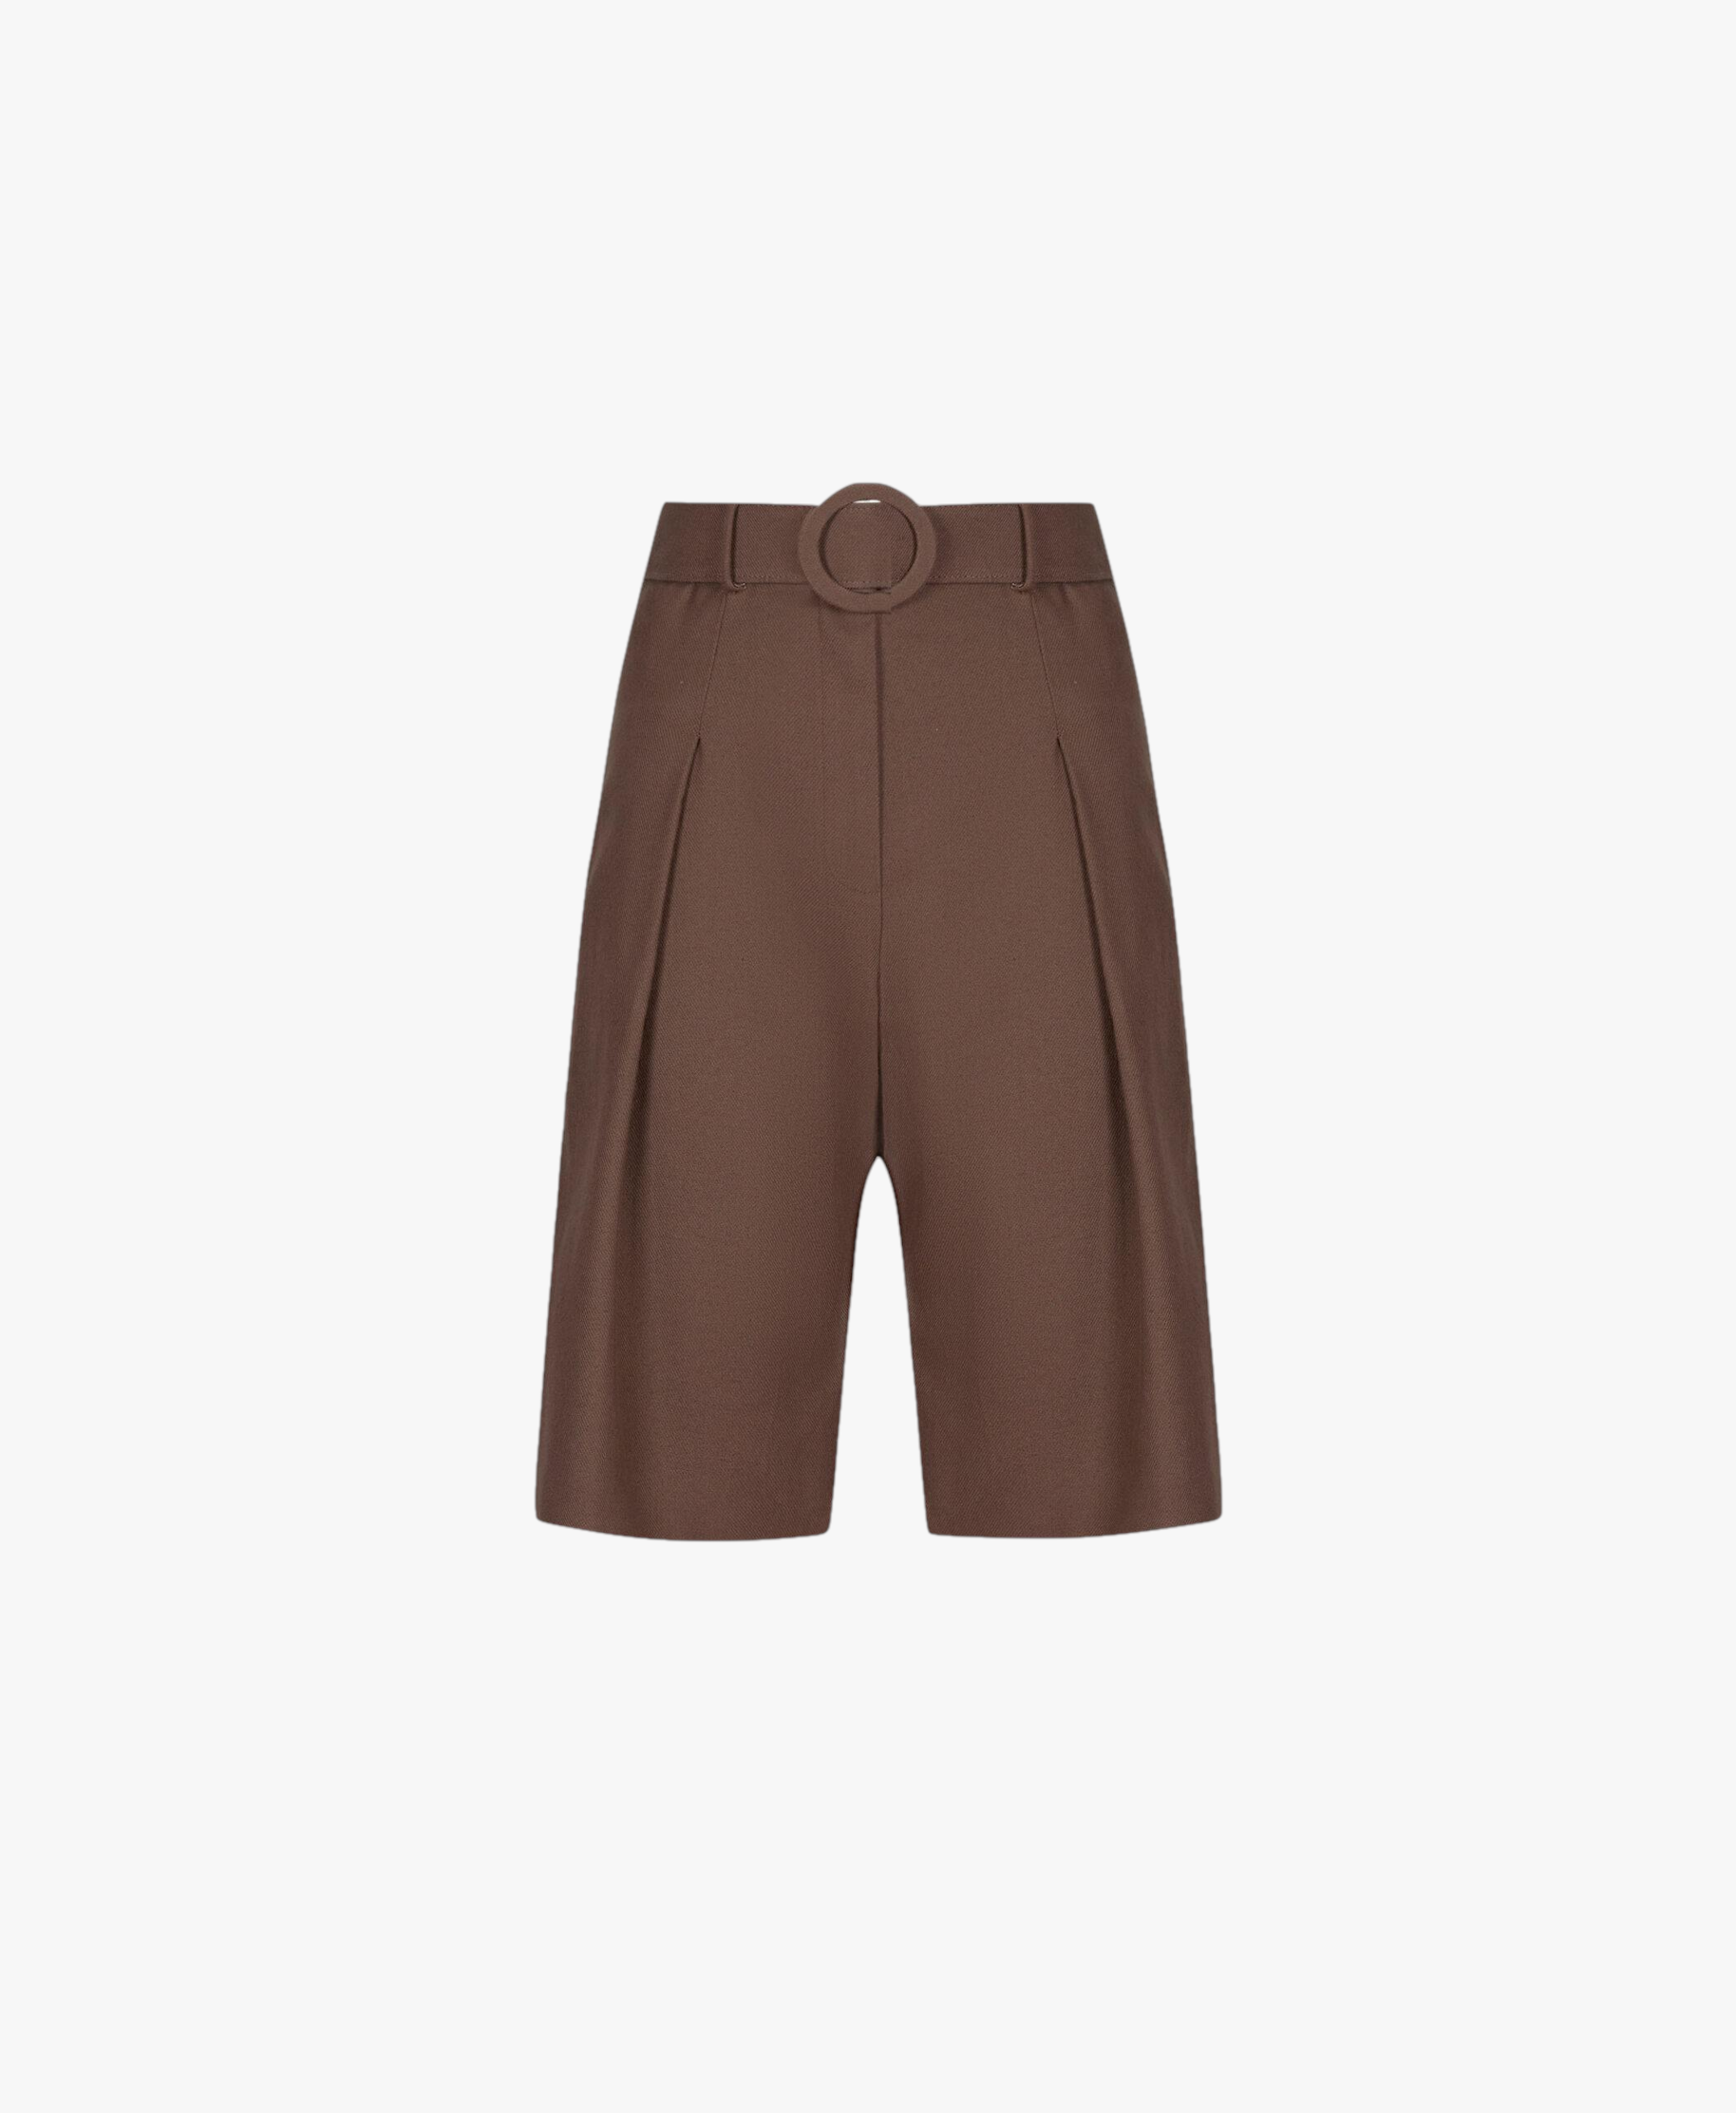 Chocolate Martini Belted Shorts #0